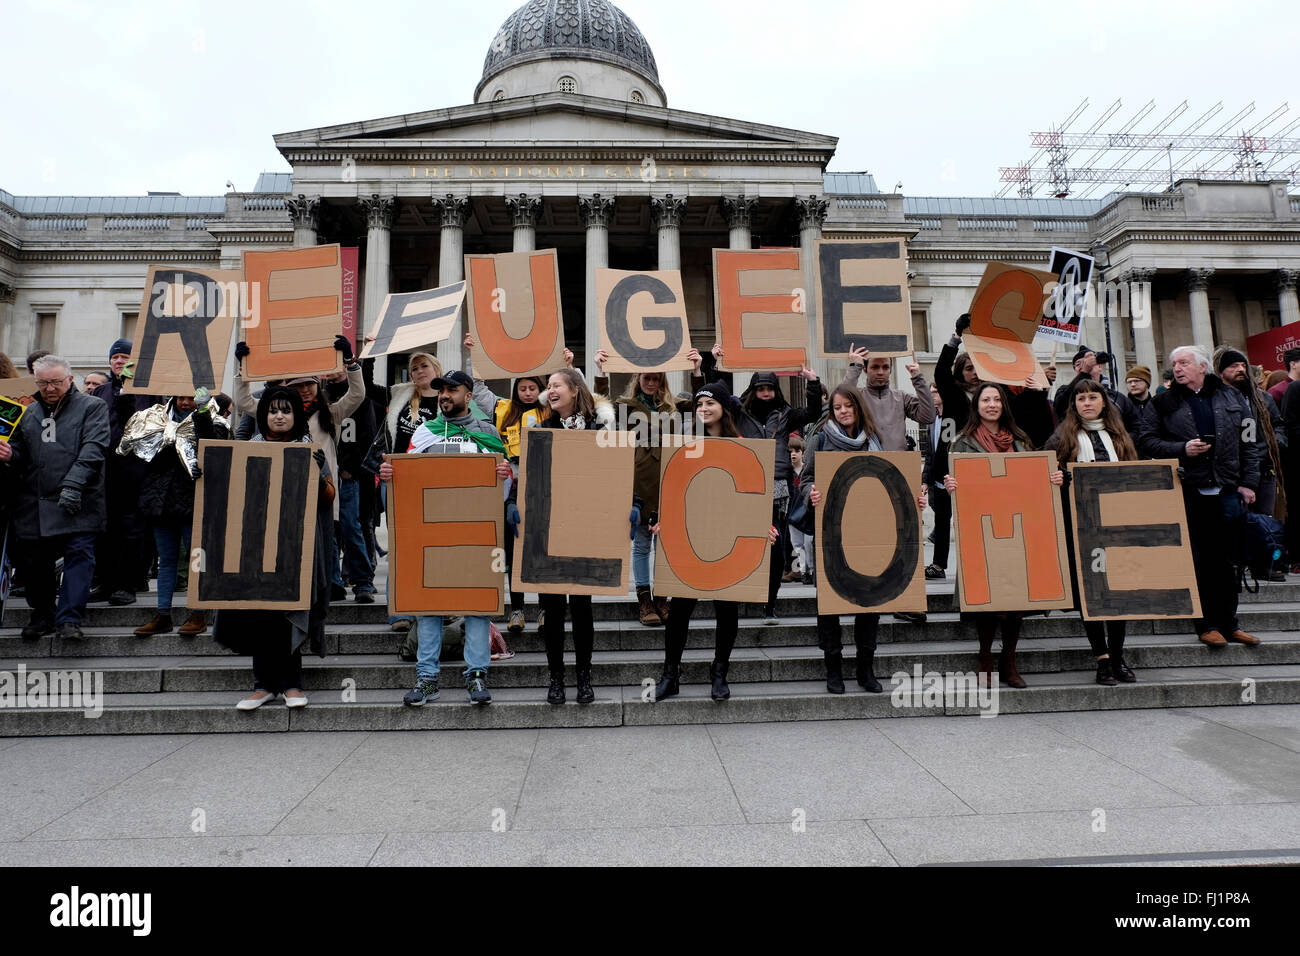 Demonstranten halten Plakat lesen "Flüchtlinge willkommen" Stockfoto